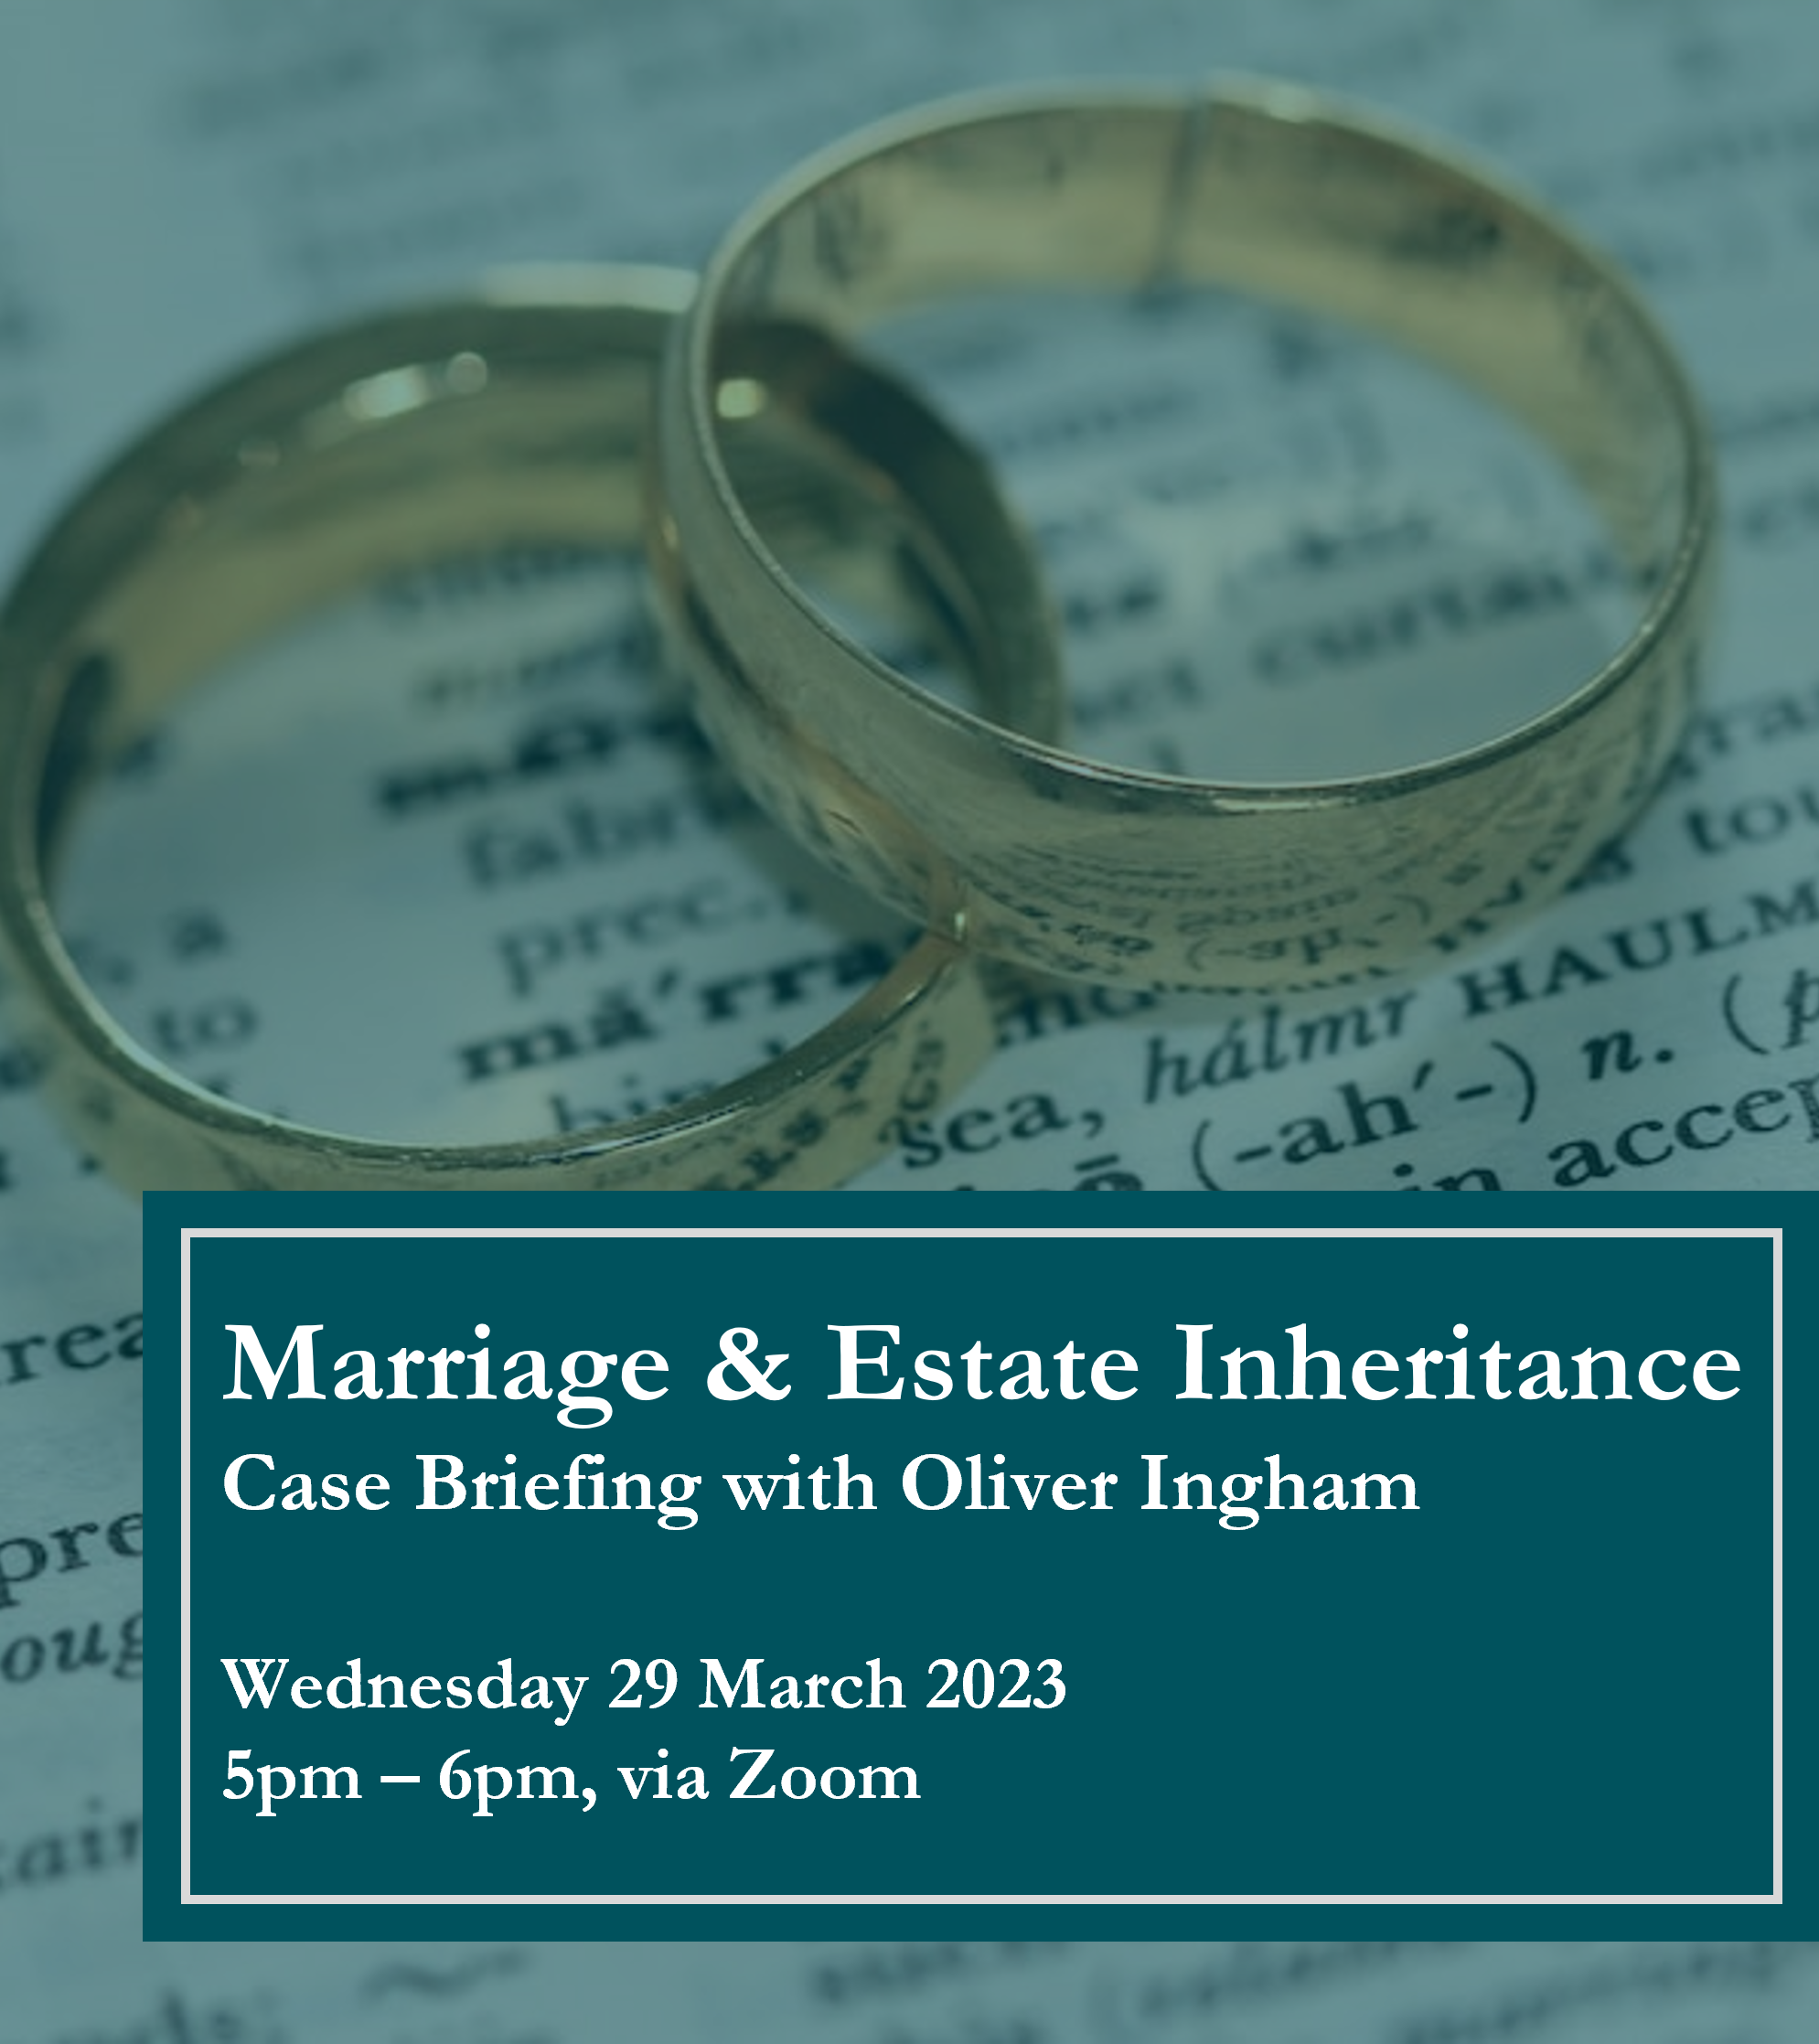 3PB Marriage Inheritance Oliver Ingham v2 square 2 e1678728267182